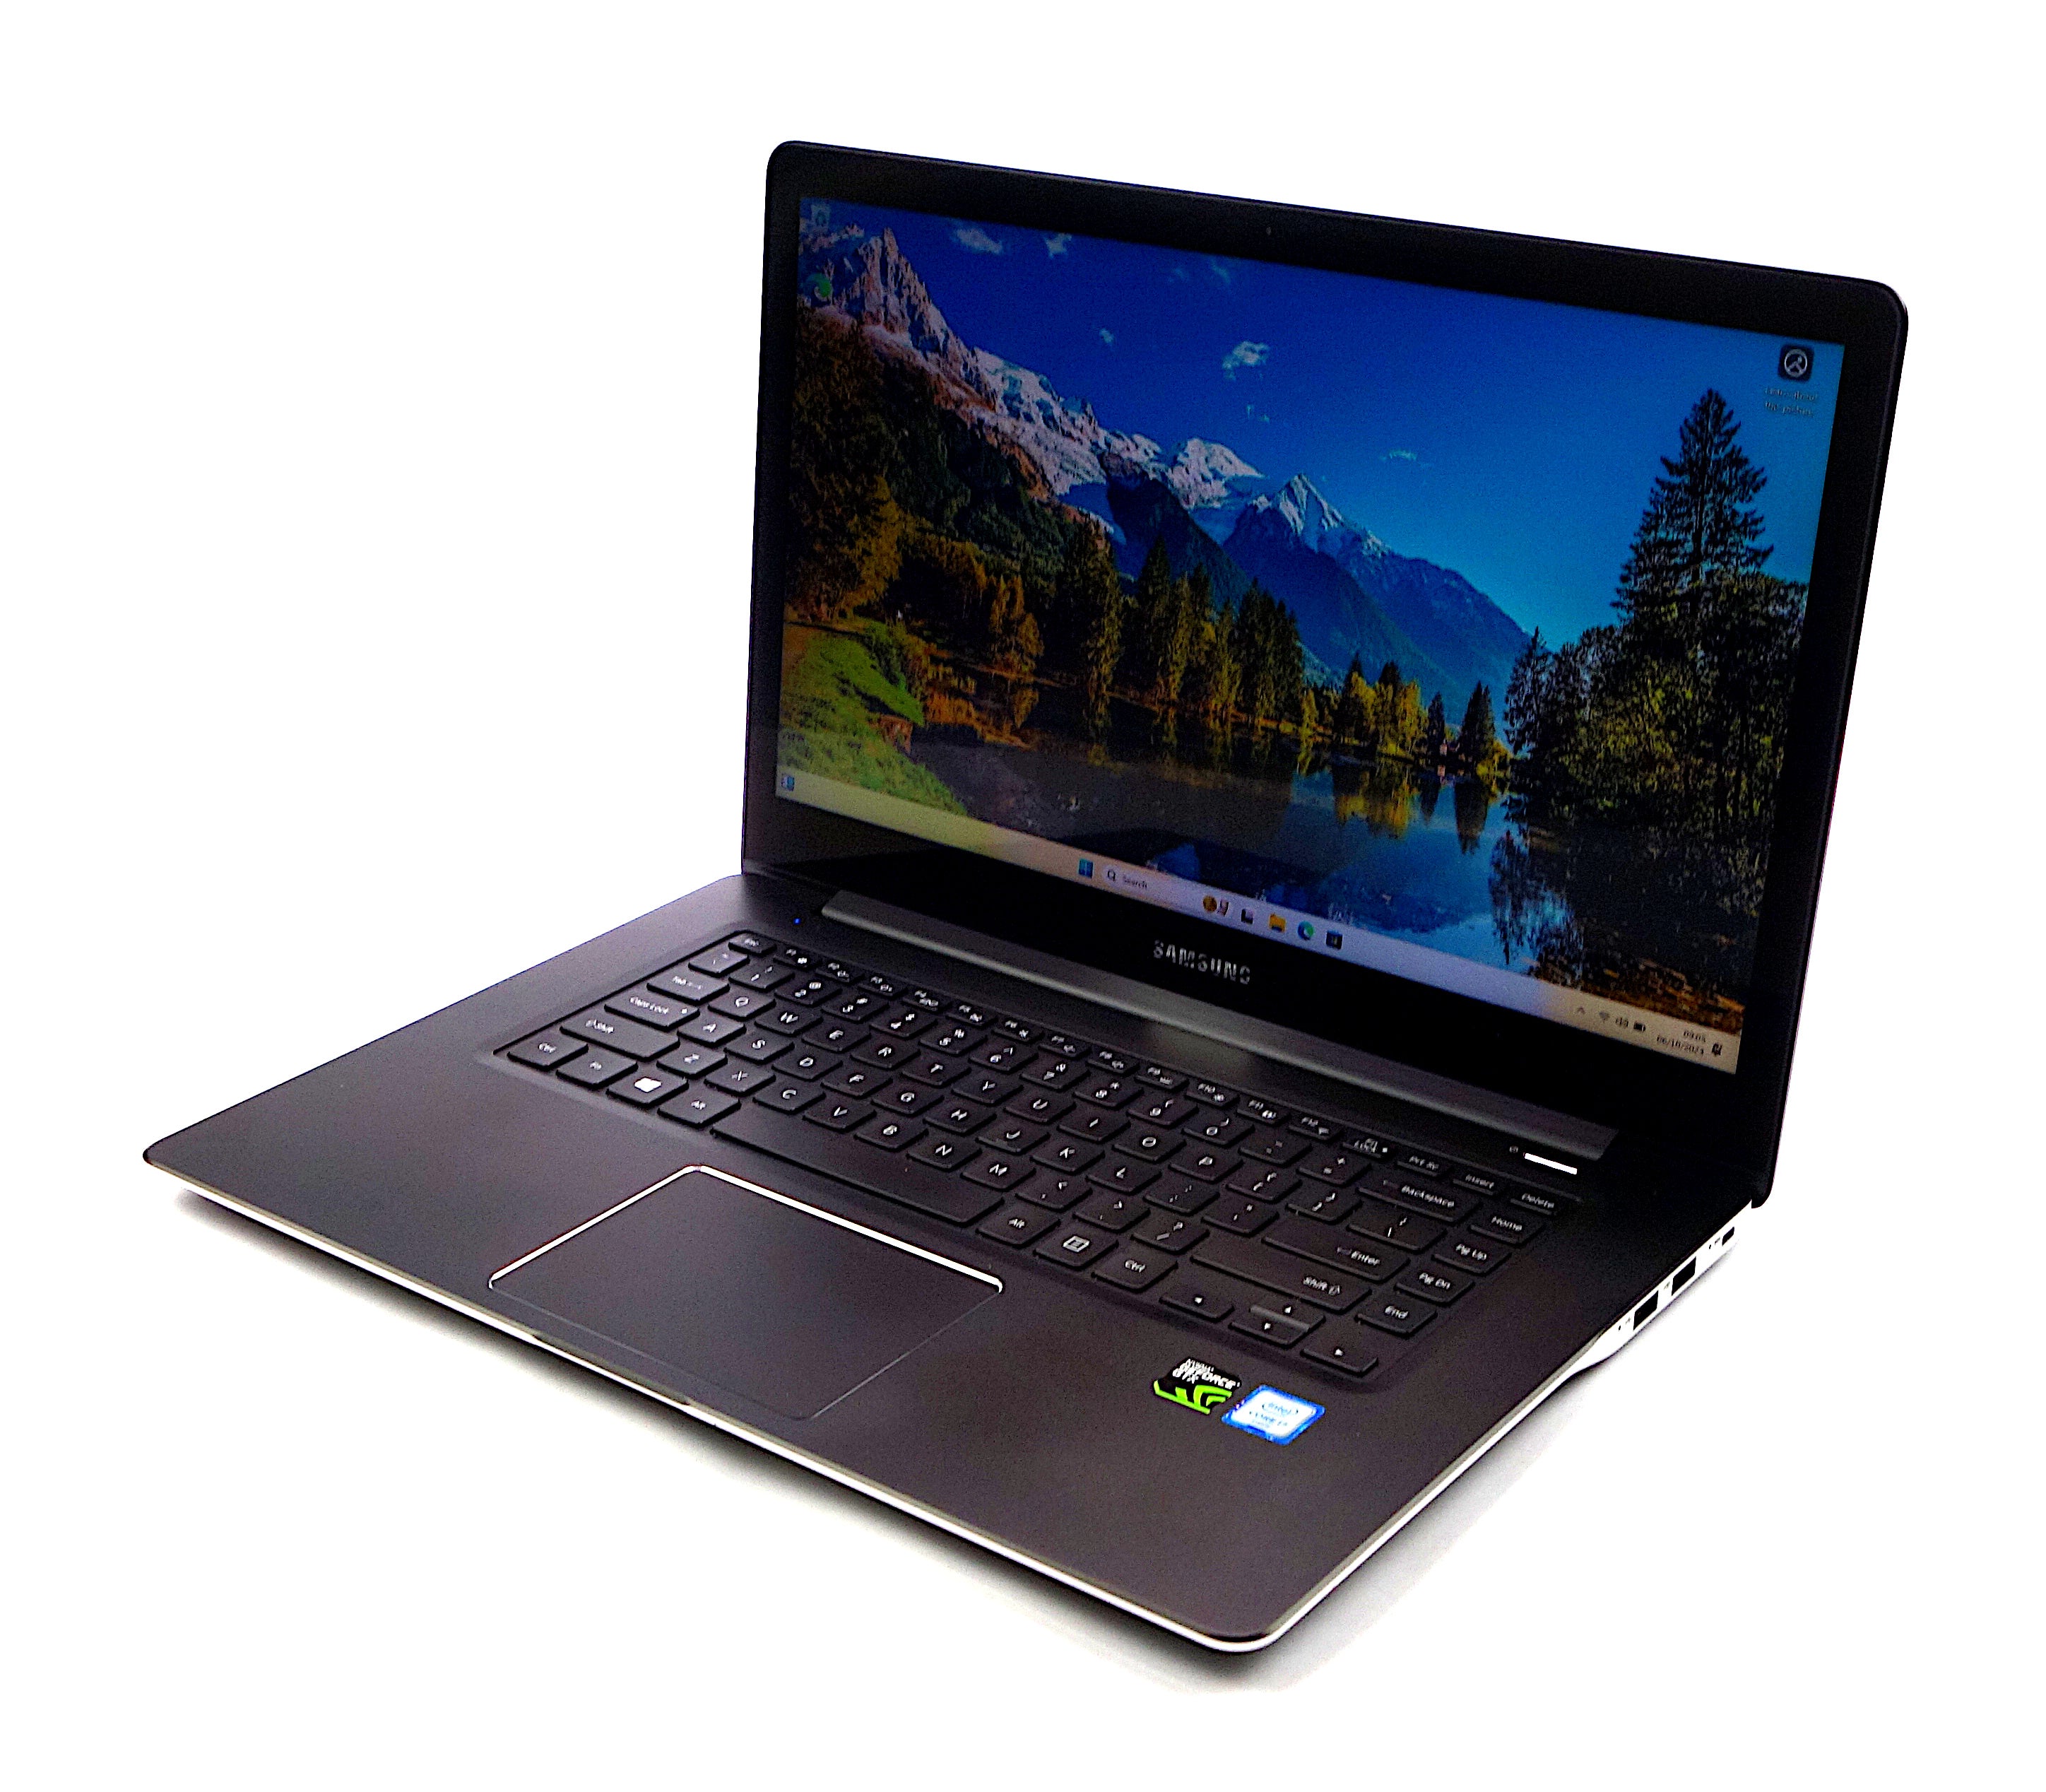 Samsung Notebook 9 Pro Laptop 15.6" Core i7 6th Gen 8GB RAM 256GB SSD